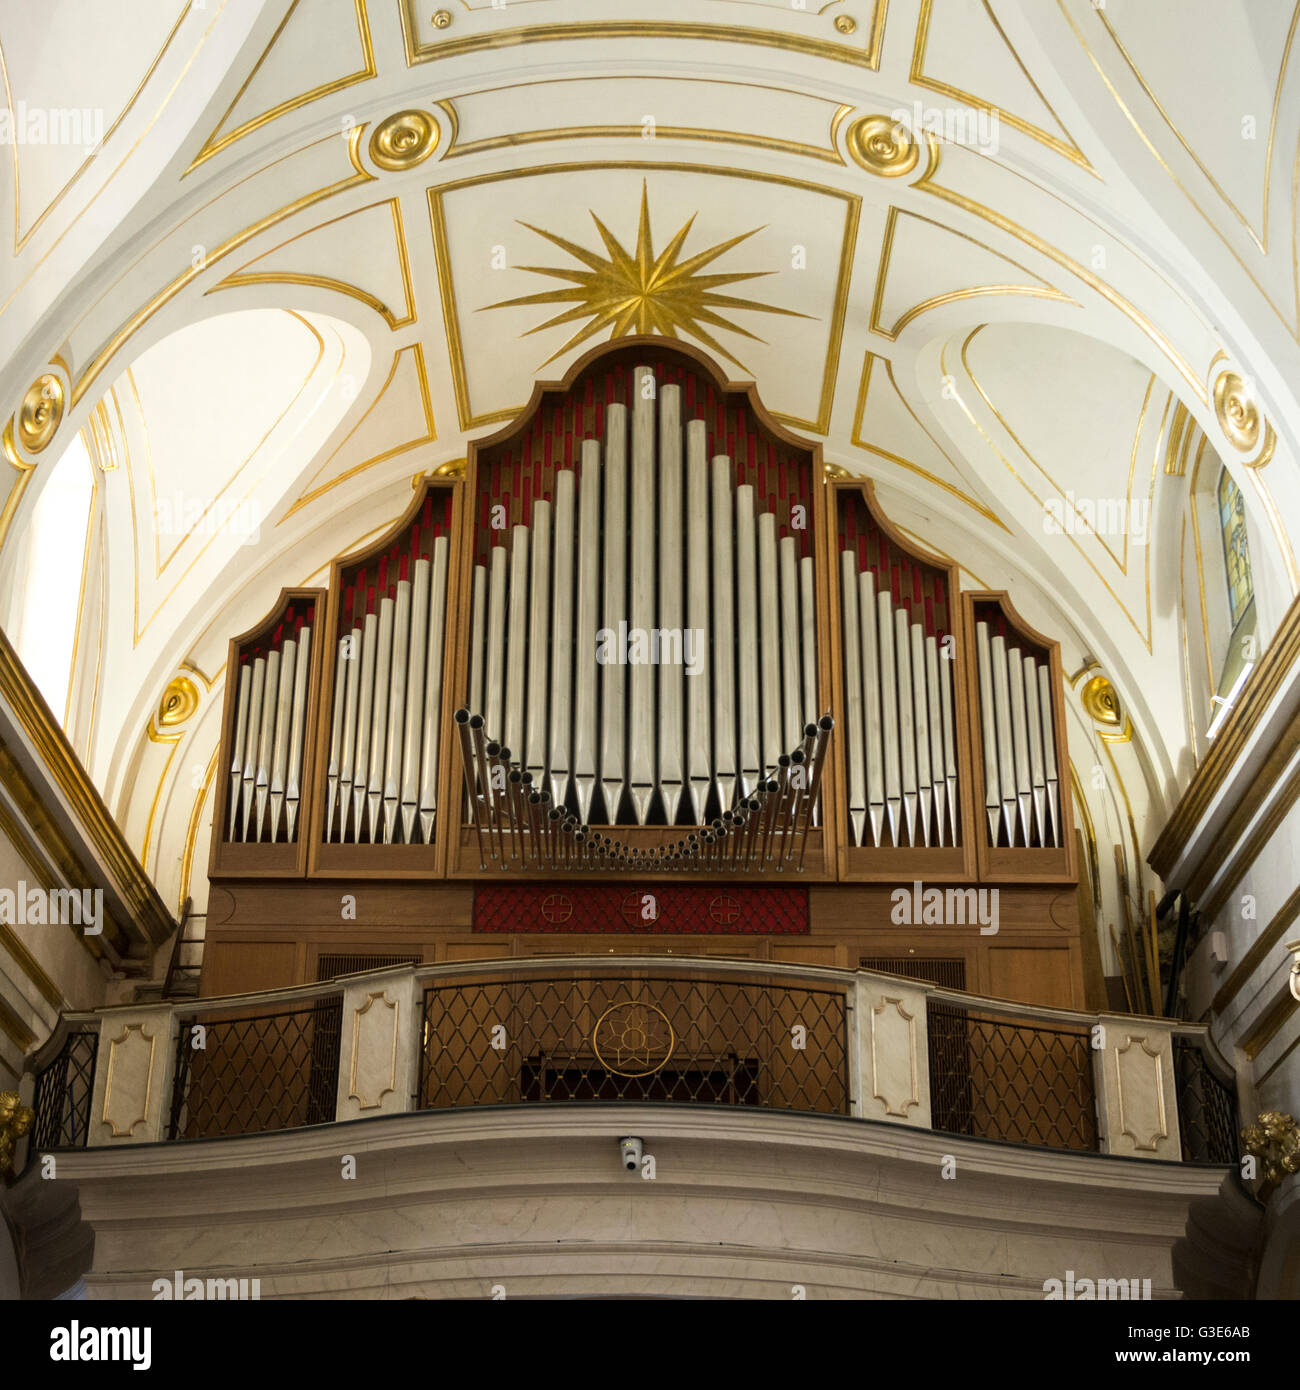 Pipe organ; Positano, Campania, Italy Stock Photo